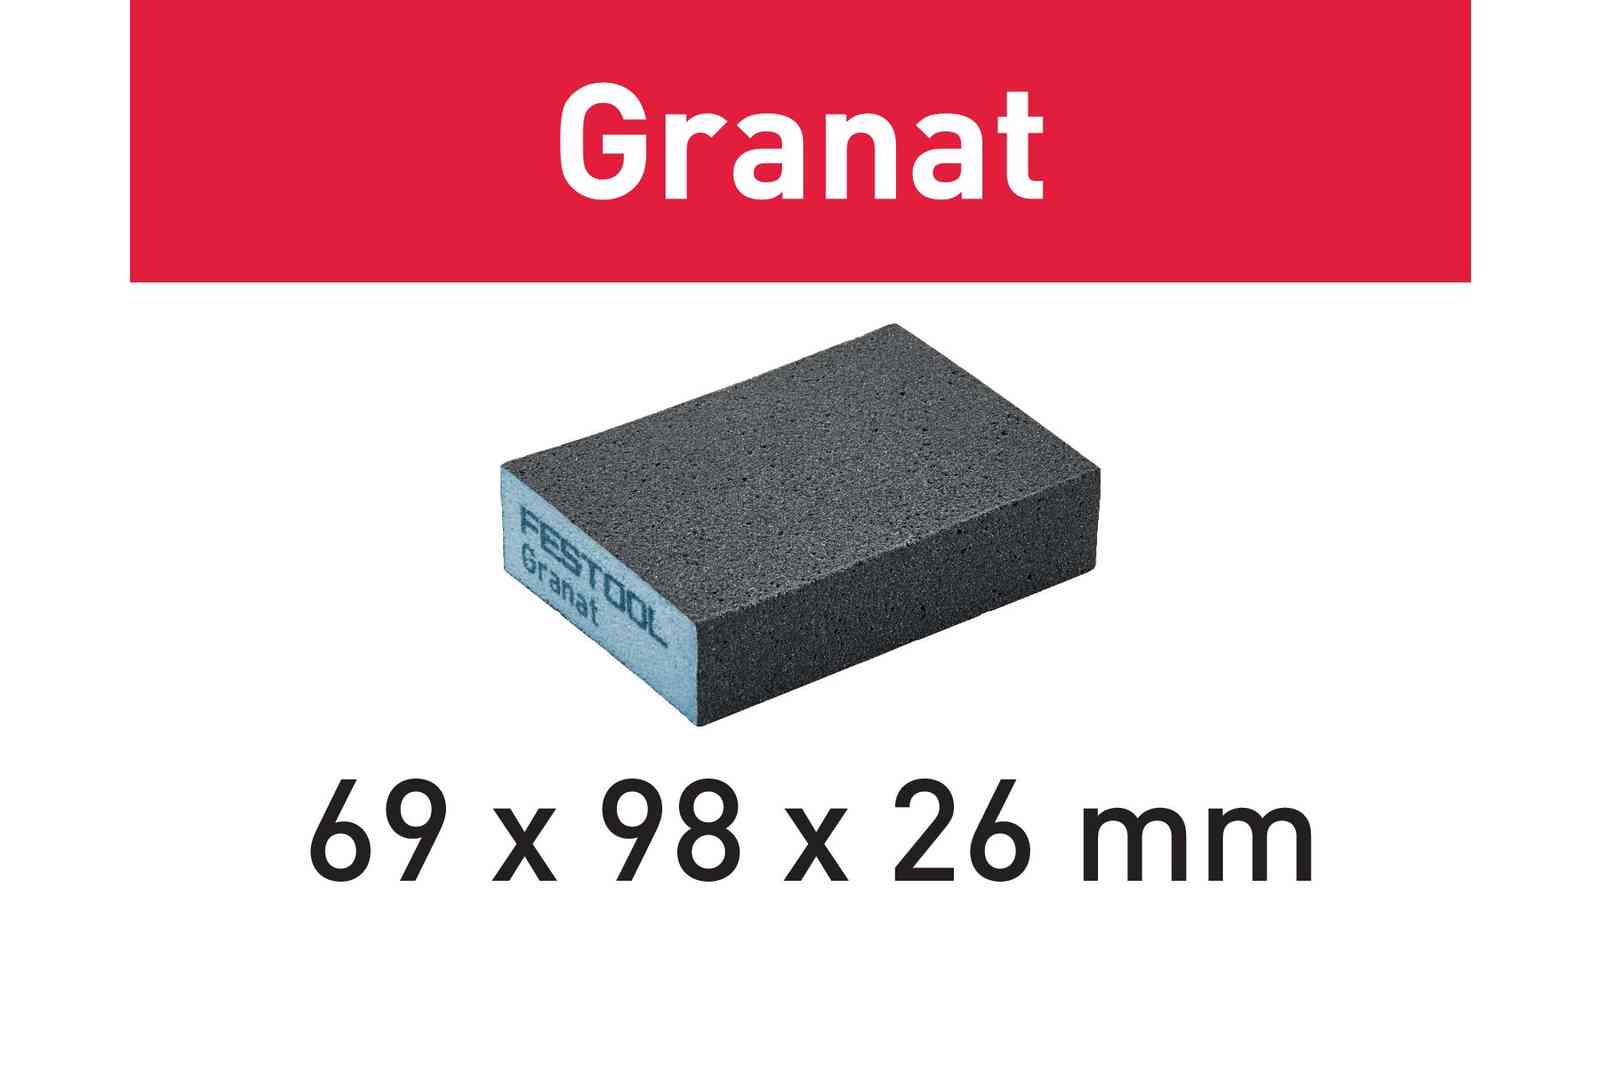 Festool Schleifblock Granat 69x98x26 220 GR/6 - 201083